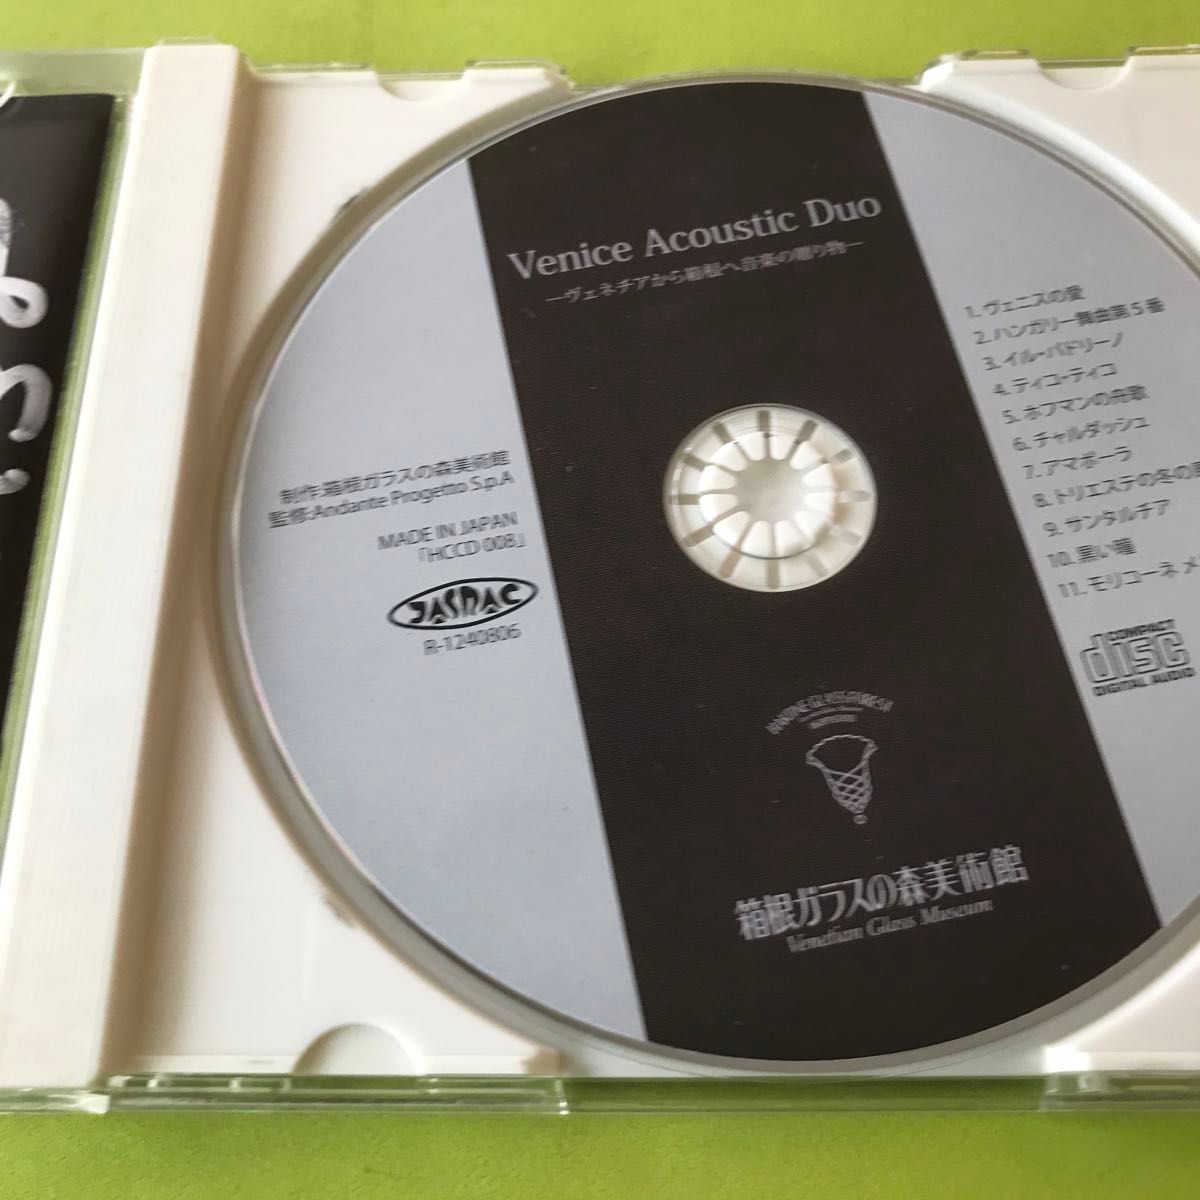 《CD》Venice Acoustic duo /  箱根ガラスの森美術館